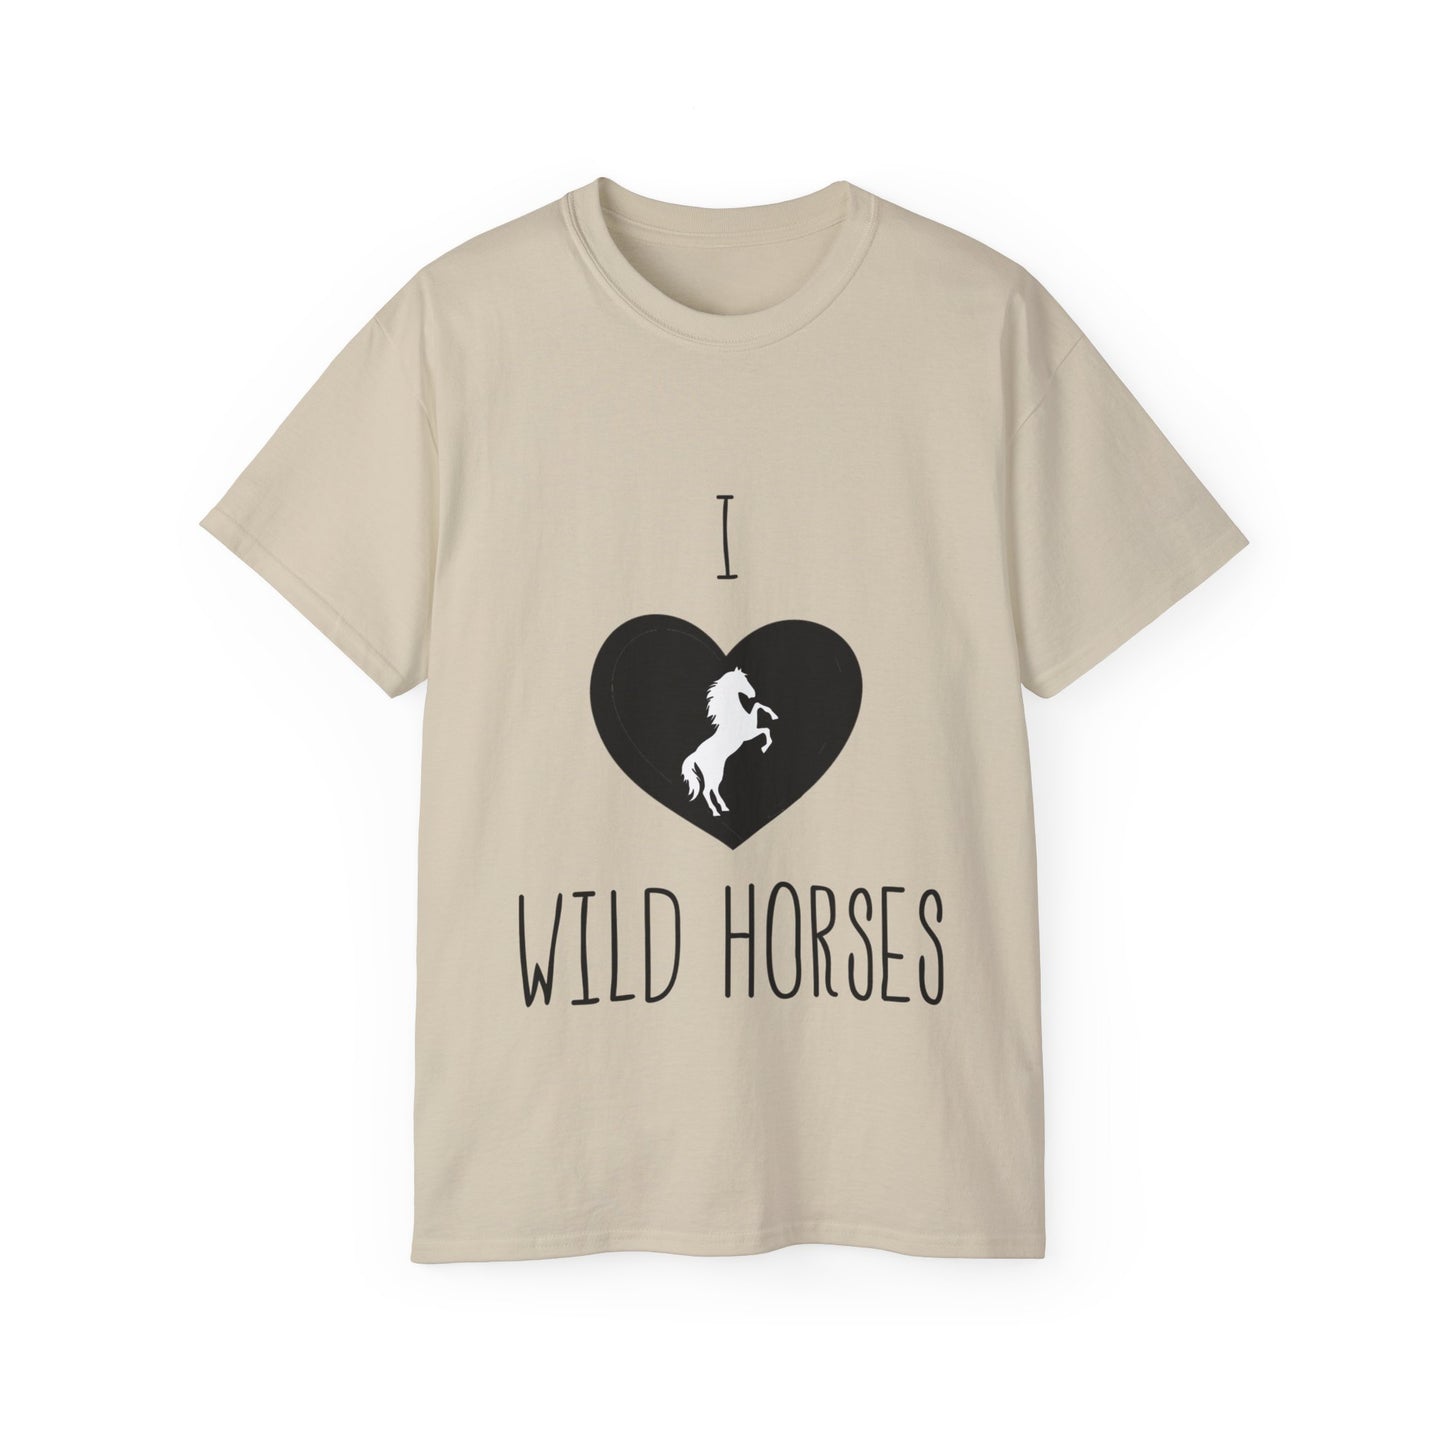 "I <3 Wild Horses" Cotton Tee